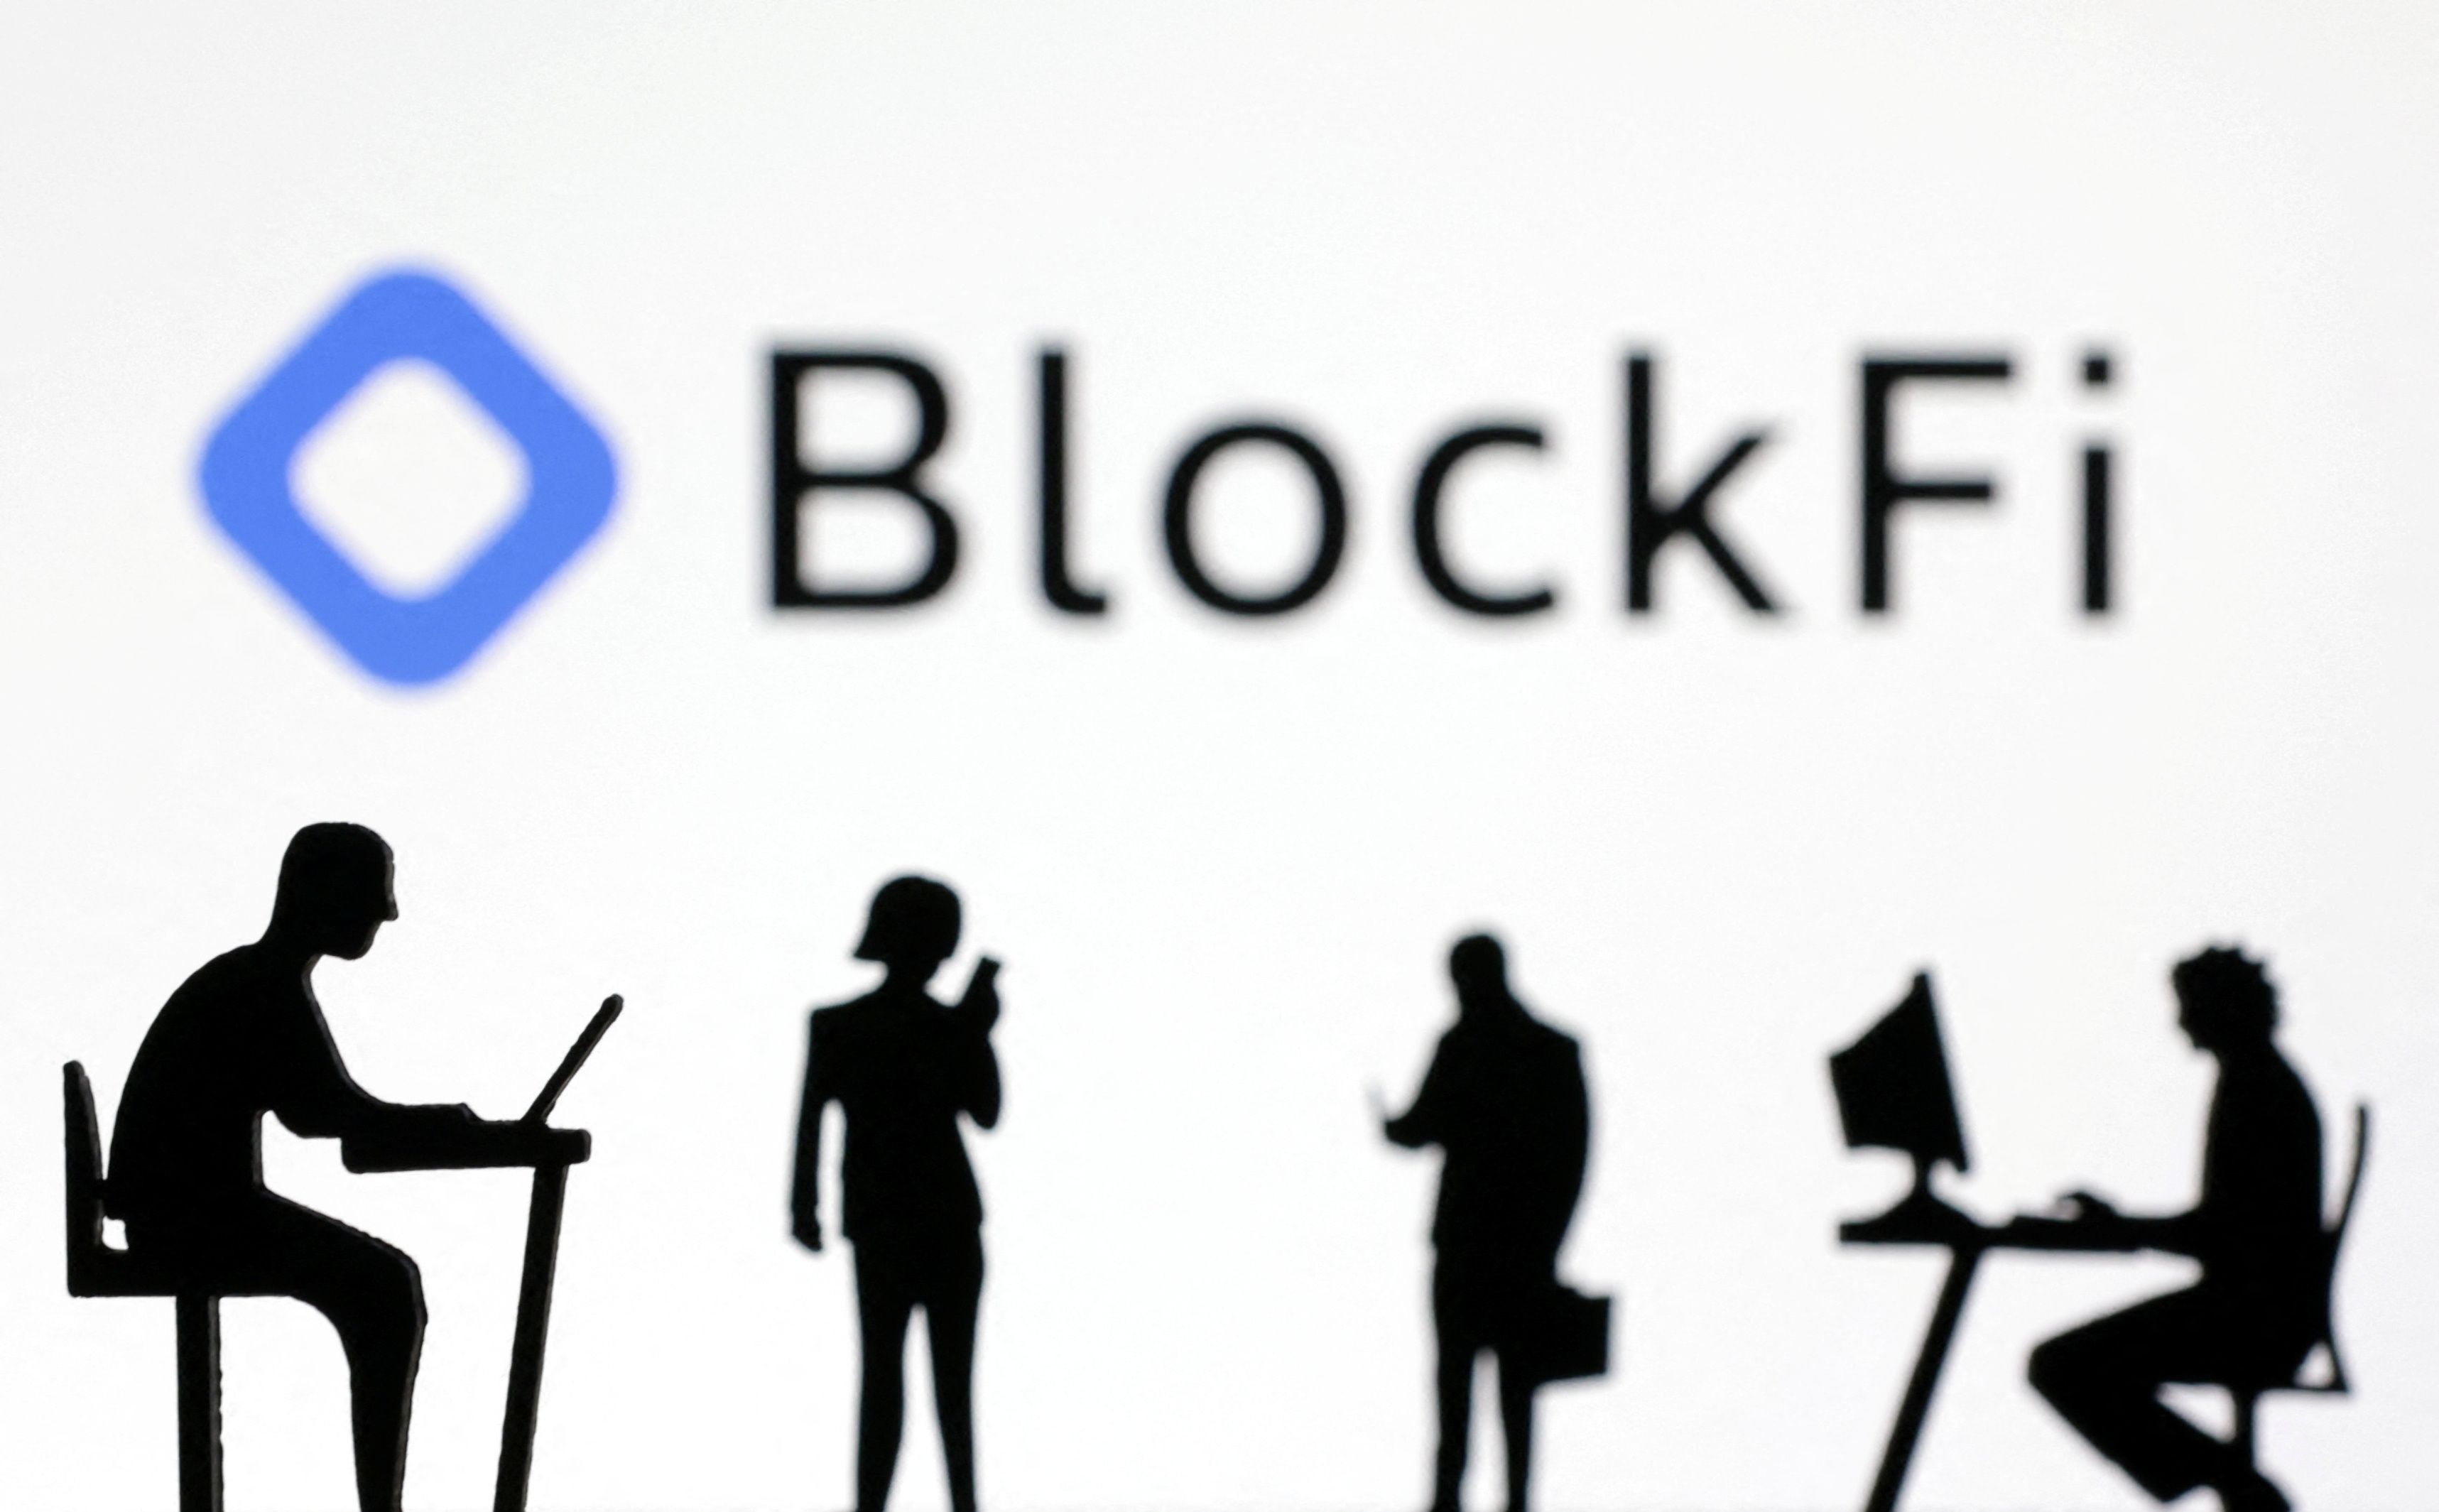 The image shows the BlockFi logo